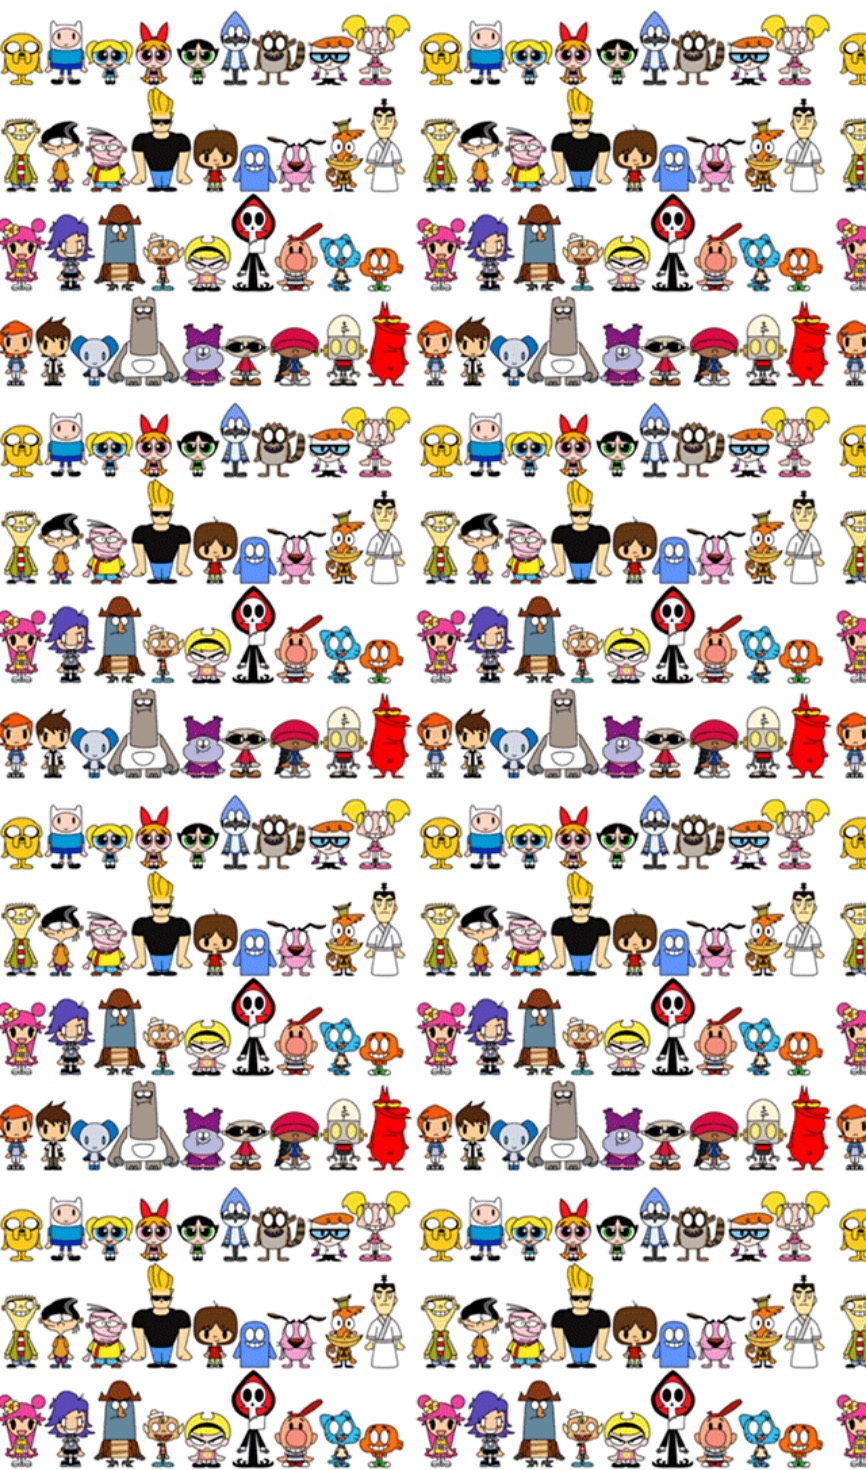 Cartoon Network Characters - Cartoon Network Photo (39762240) - Fanpop